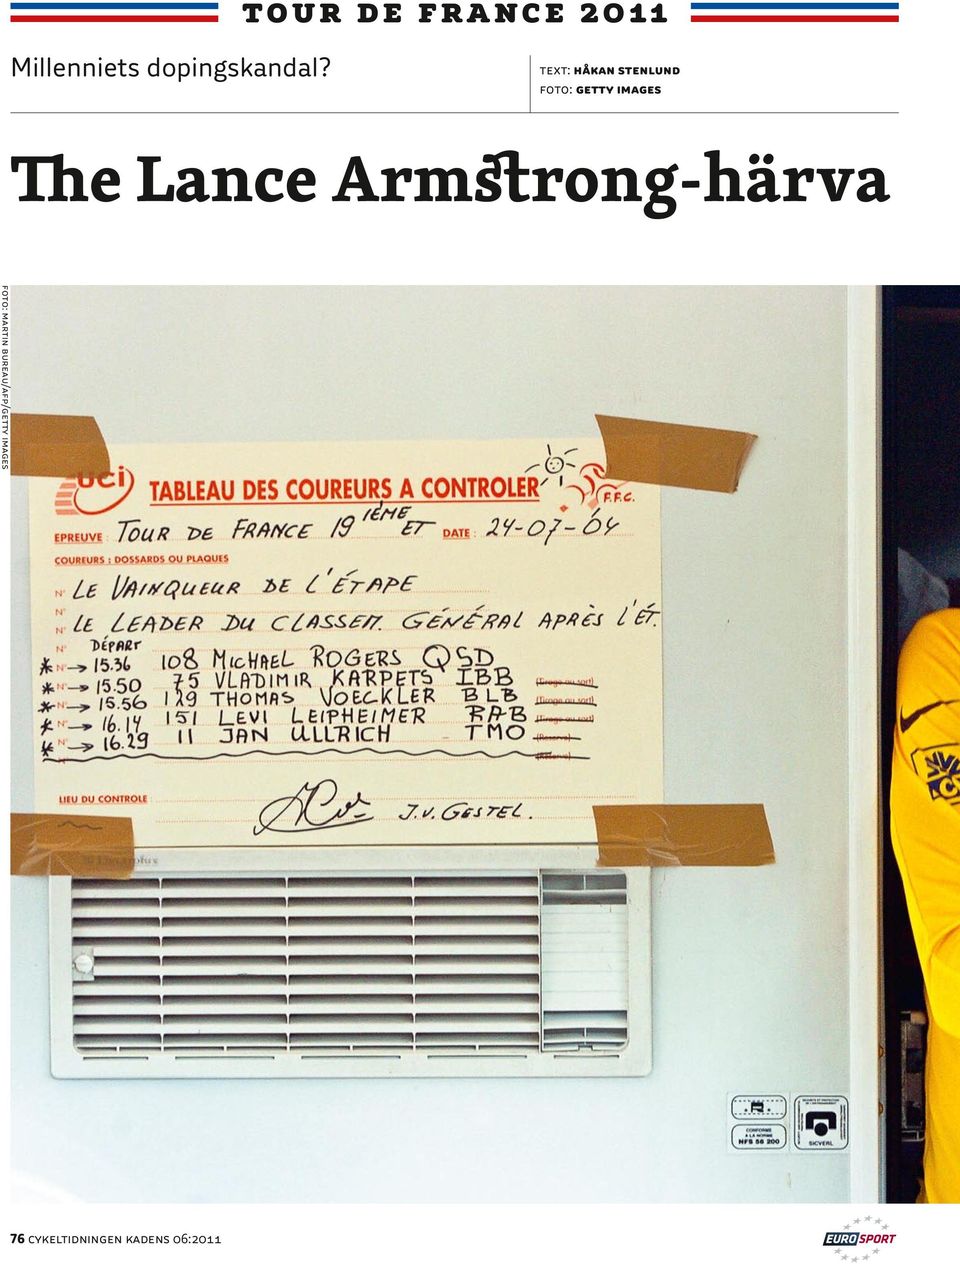 The Lance Armstrong-härva foto: martin